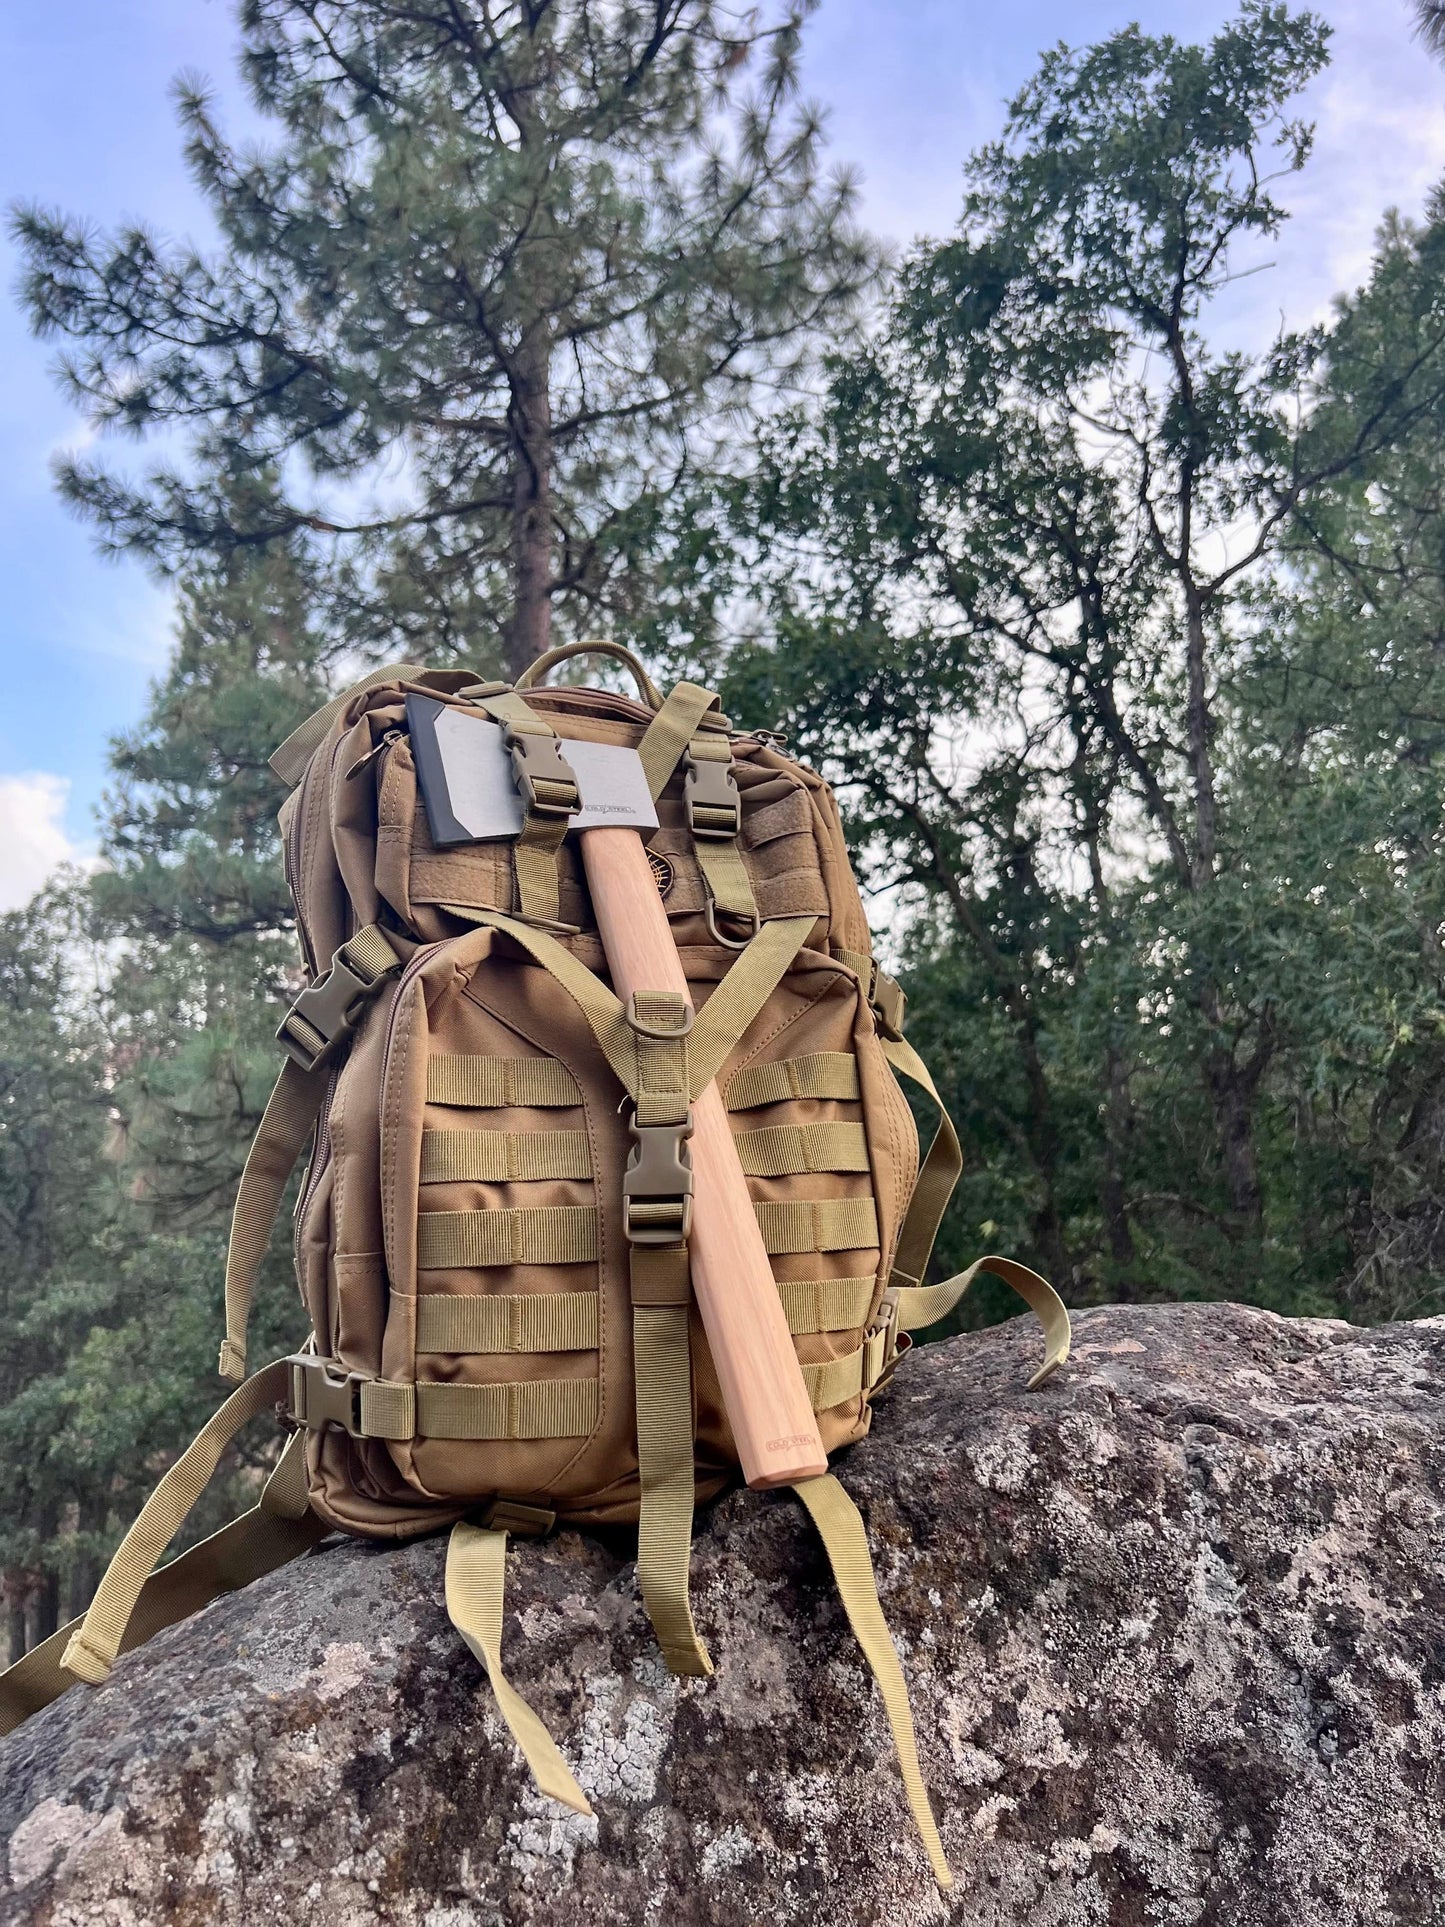 Kenözen Military Backpack KenÖzen Arctos 45L Outdoor Rucksack Backpack, Morale/Unit Patch and Hydration System